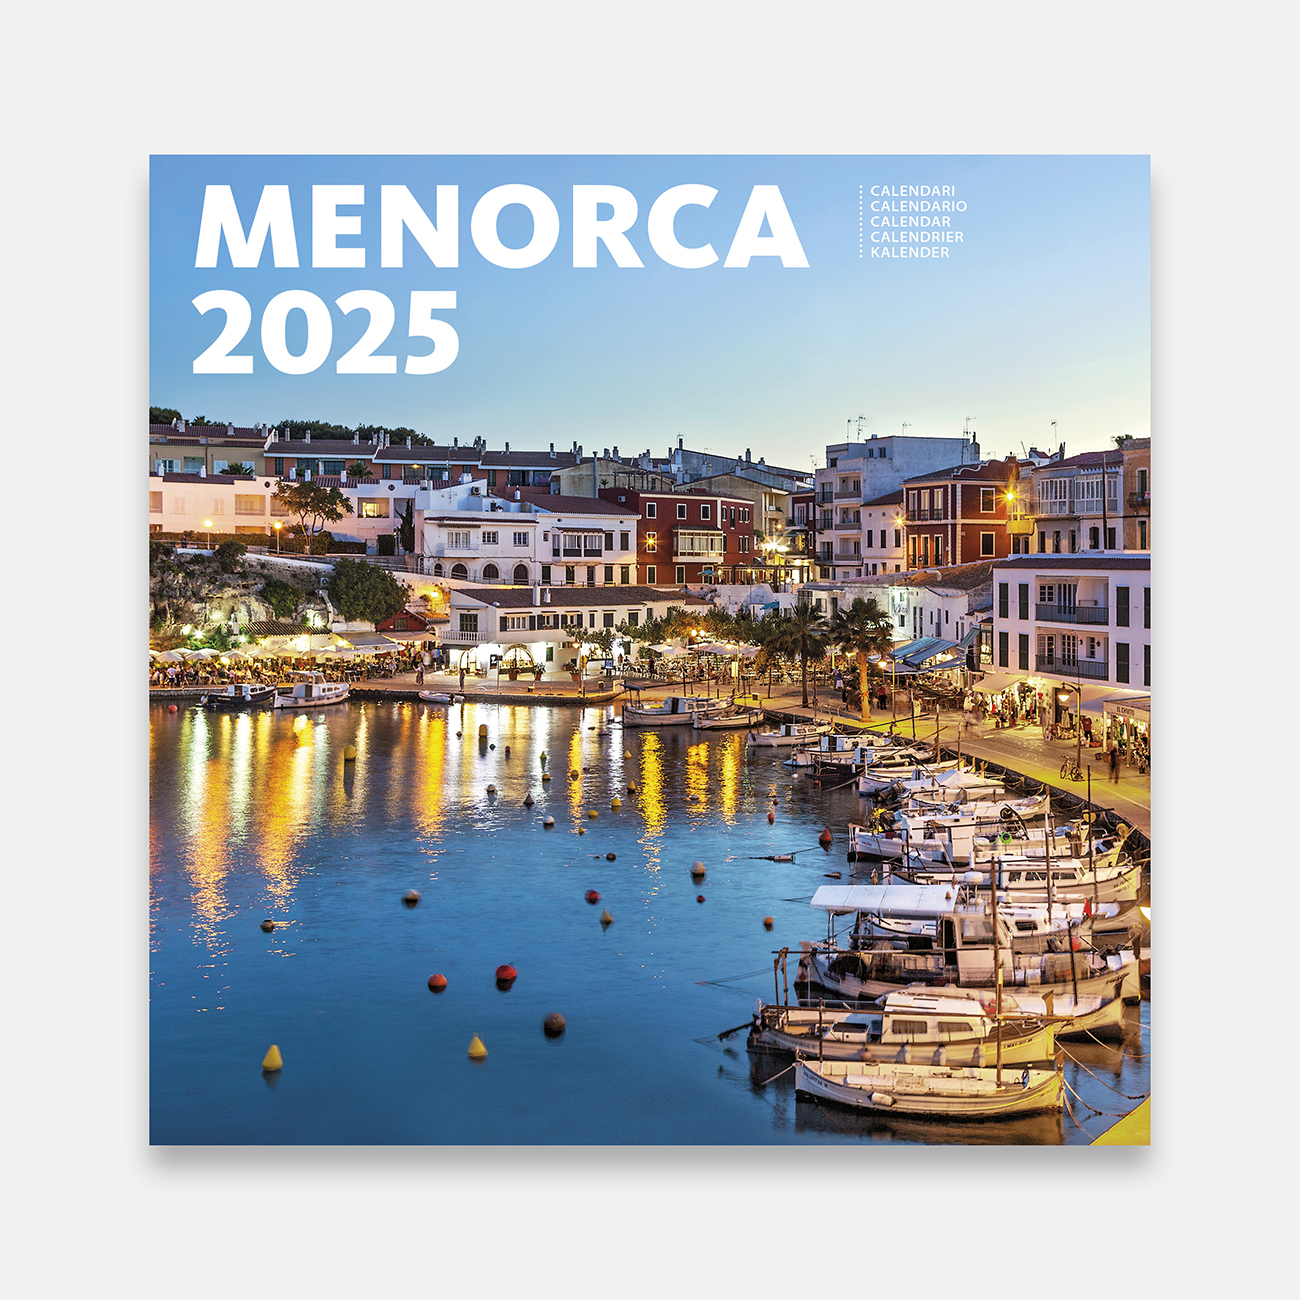 Calendar 2025 Menorca 25me b calendario pared 2025 menorca